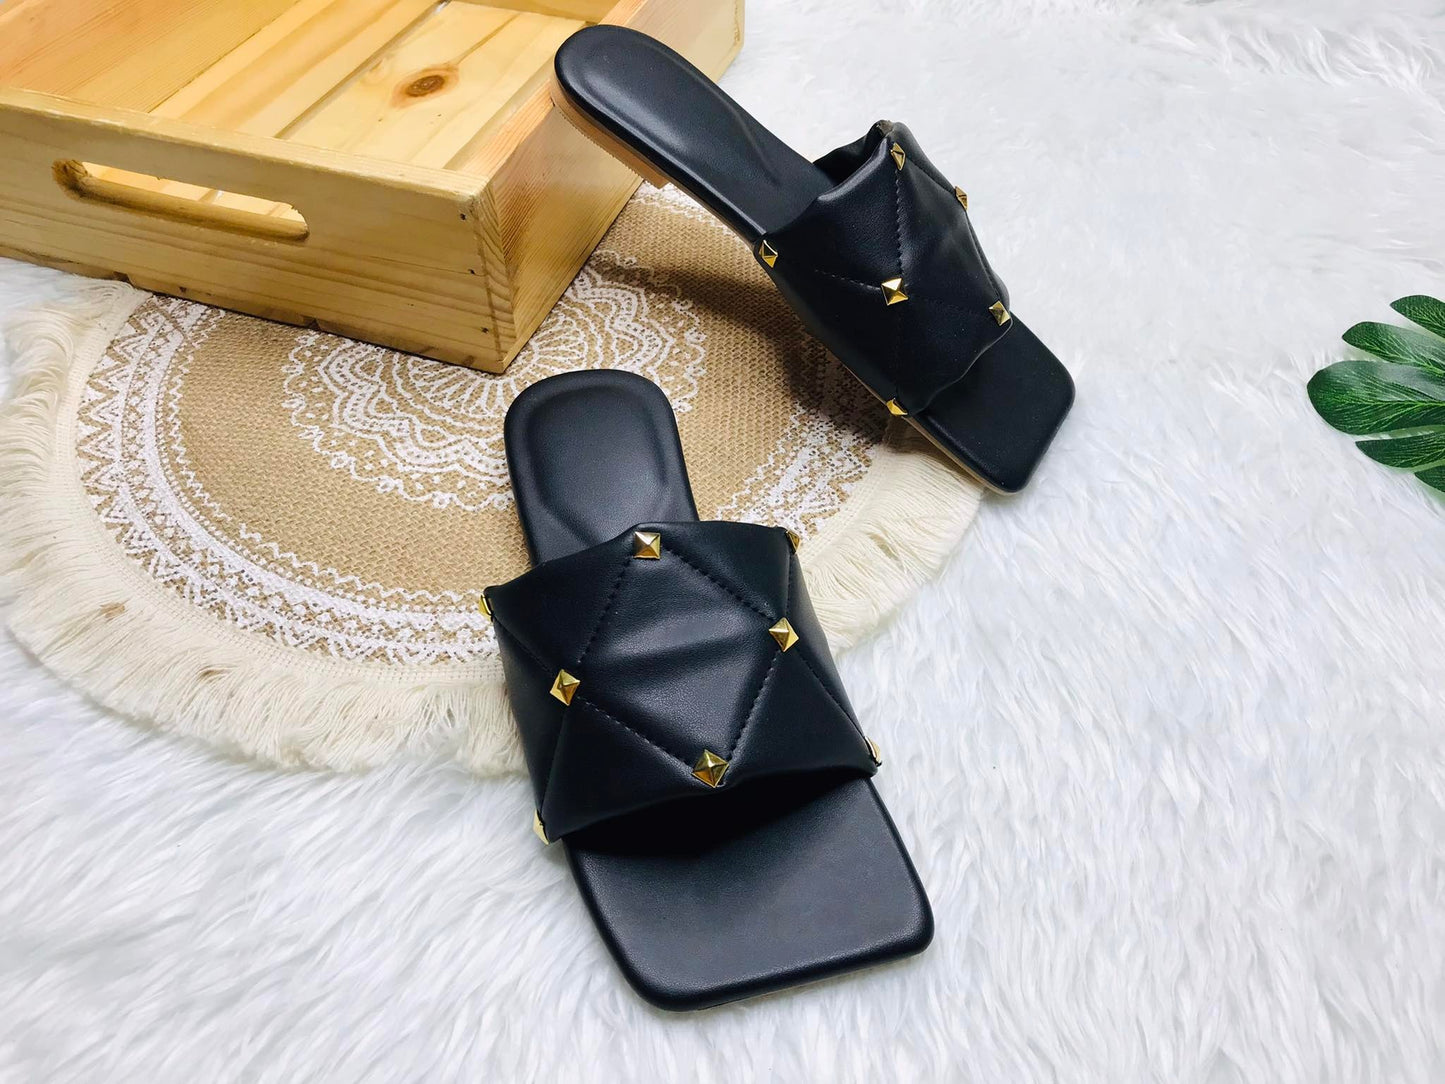 Mgubs - RIZZHI - Premium sandals